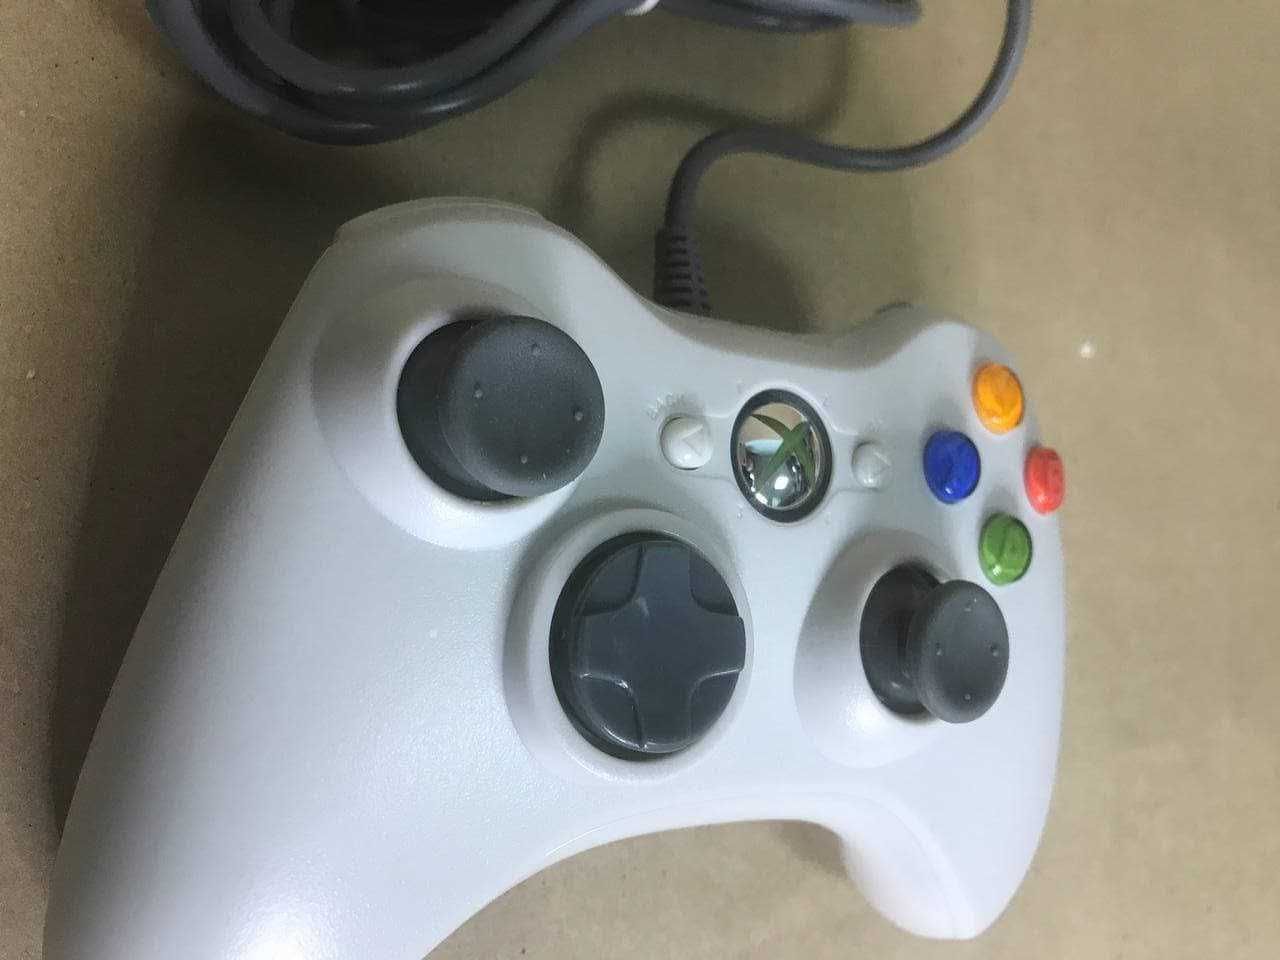 Дротовий джойстик Microsoft Xbox 360